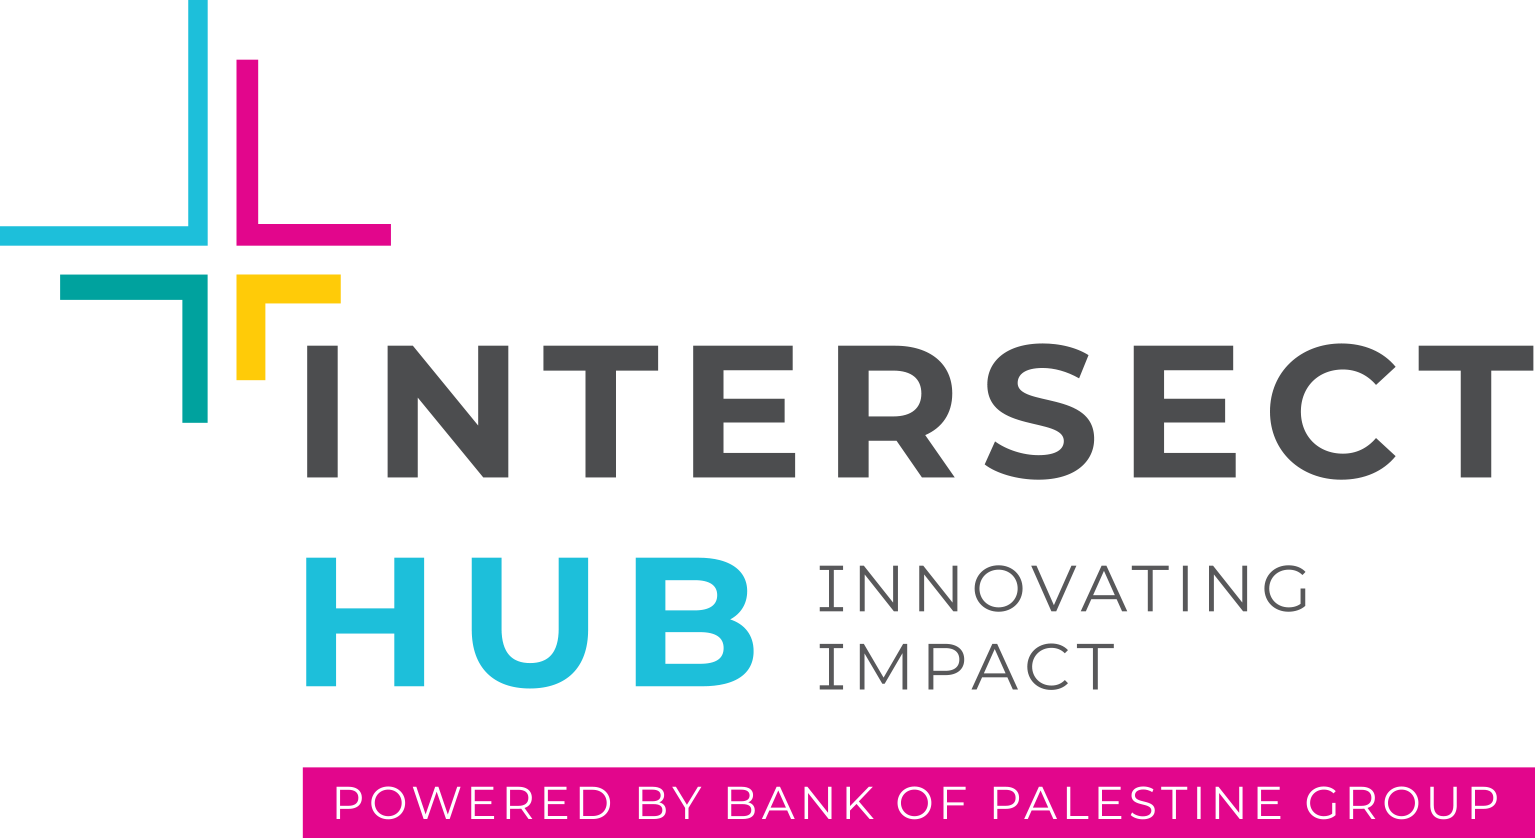 Intersect Hub Innovation Impact